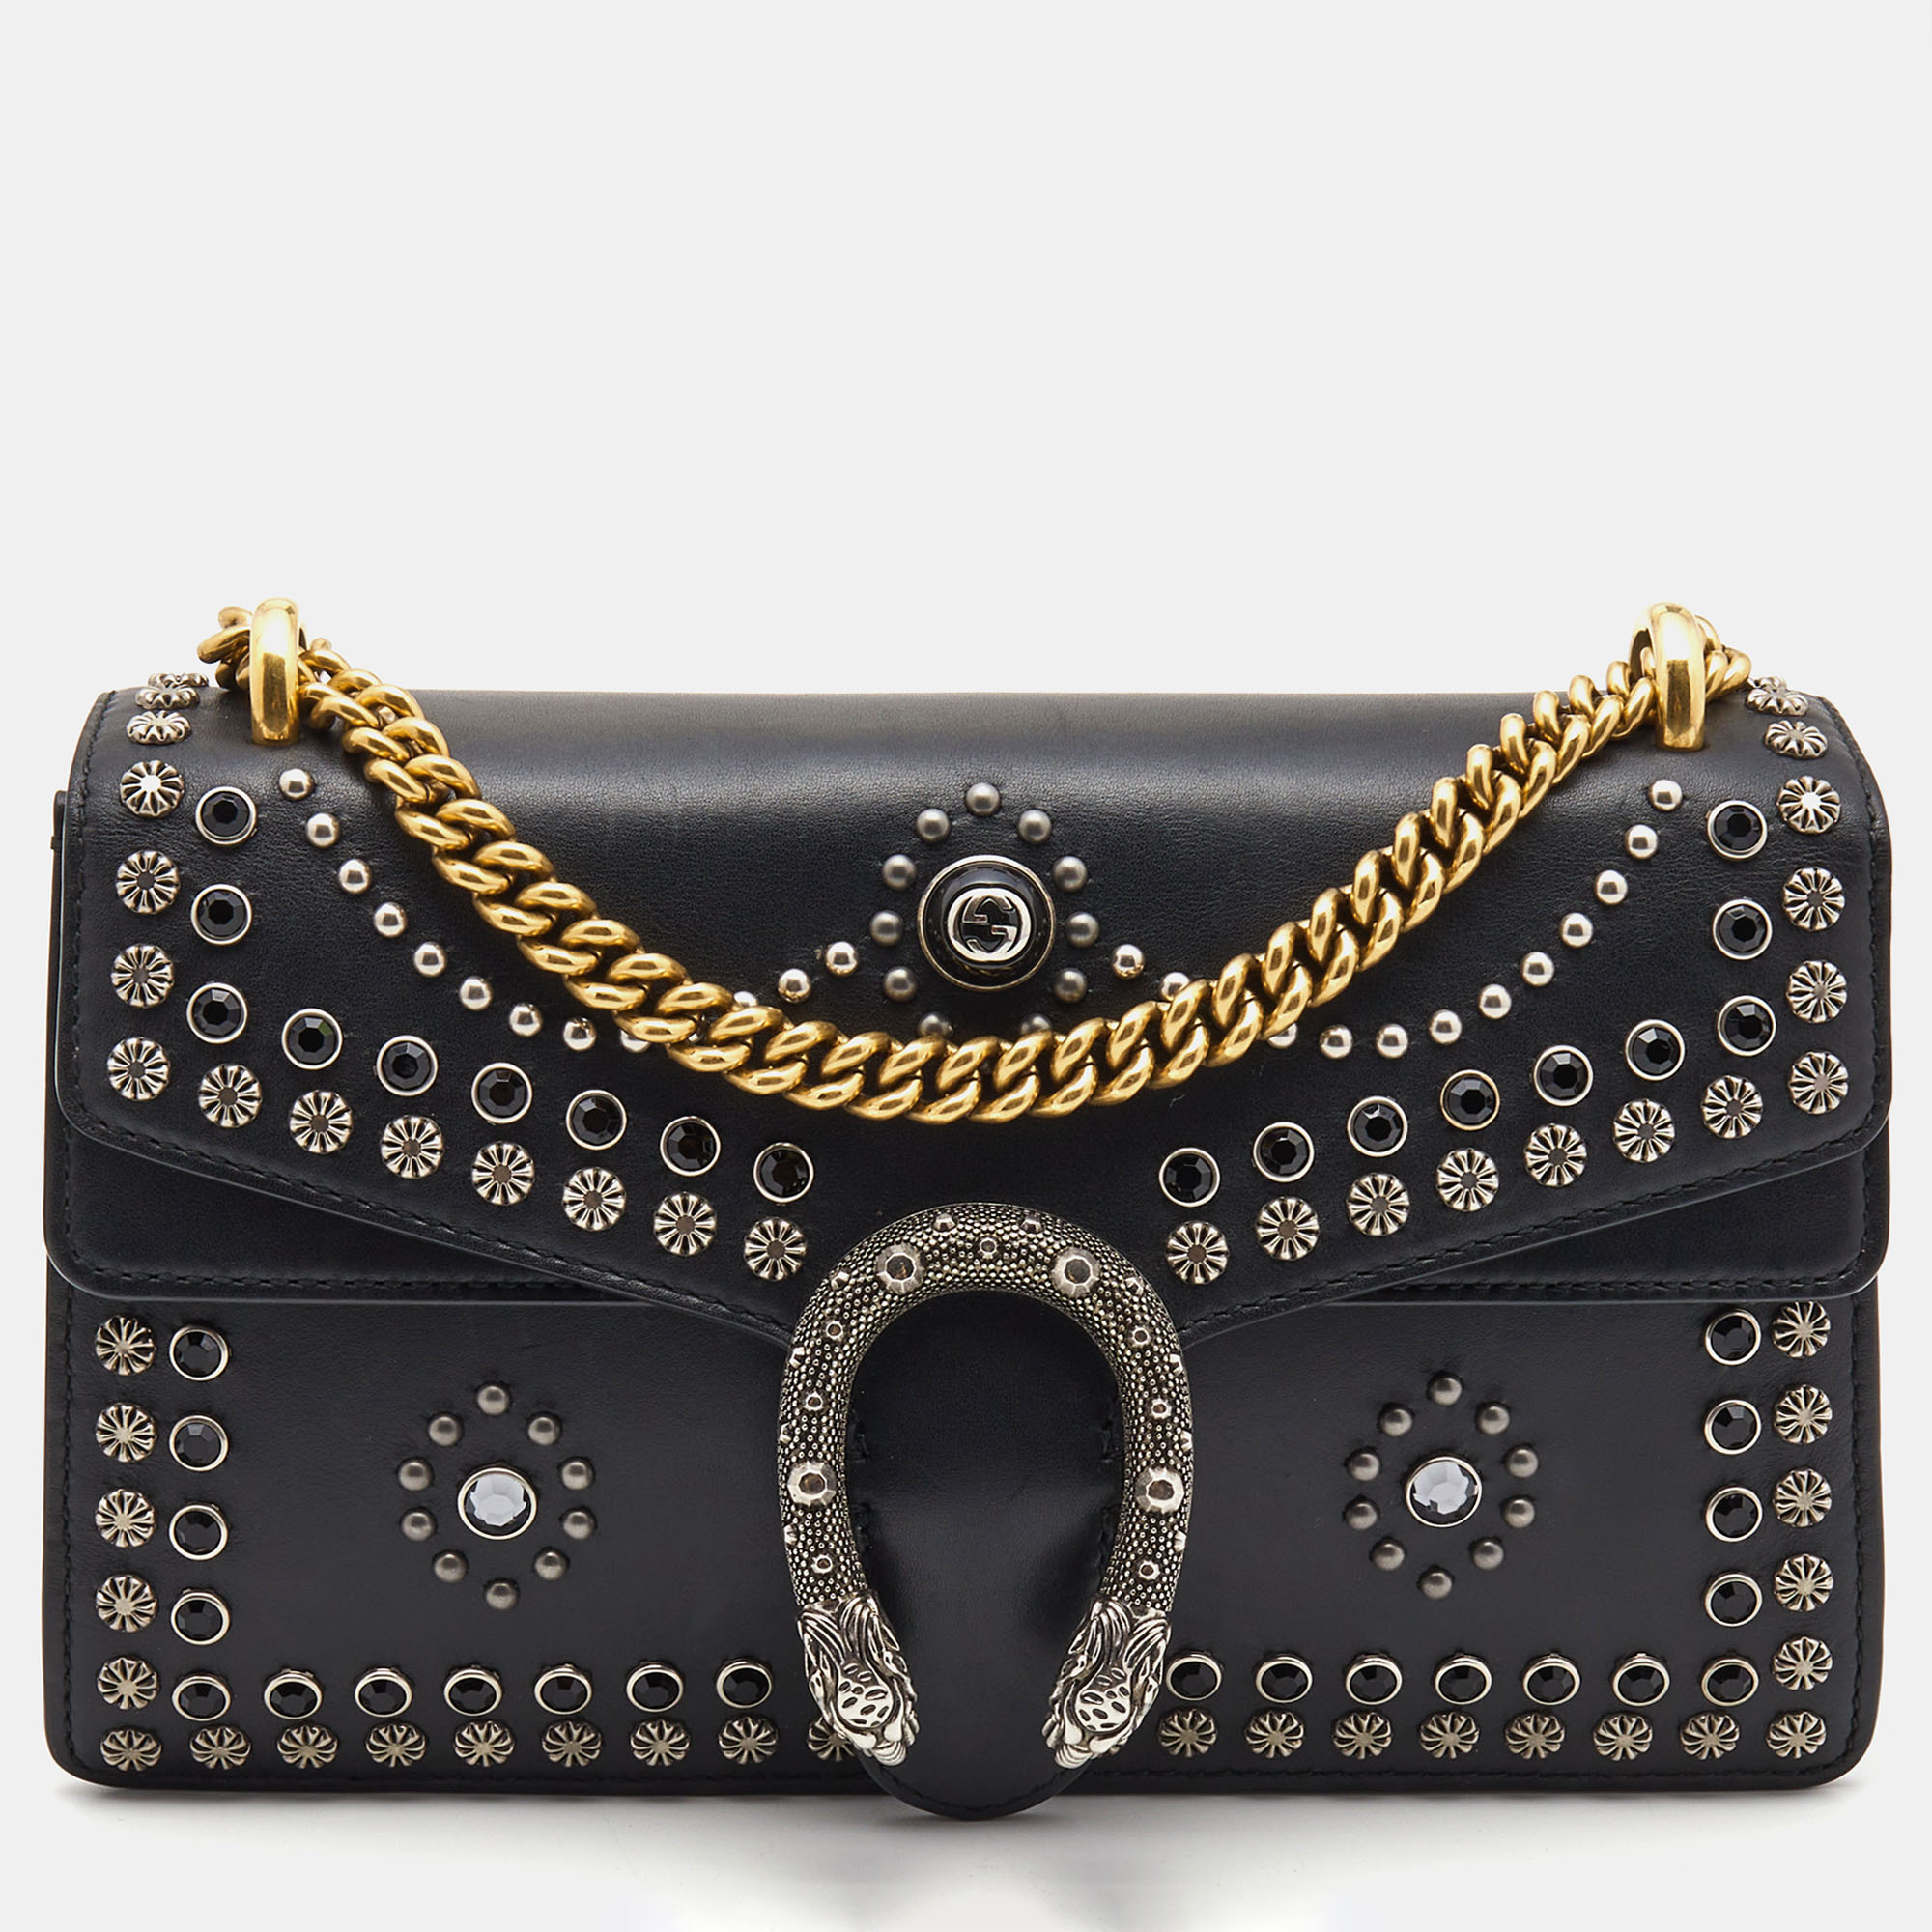 Gucci Black Leather Small Strass Studded Dionysus Shoulder Bag